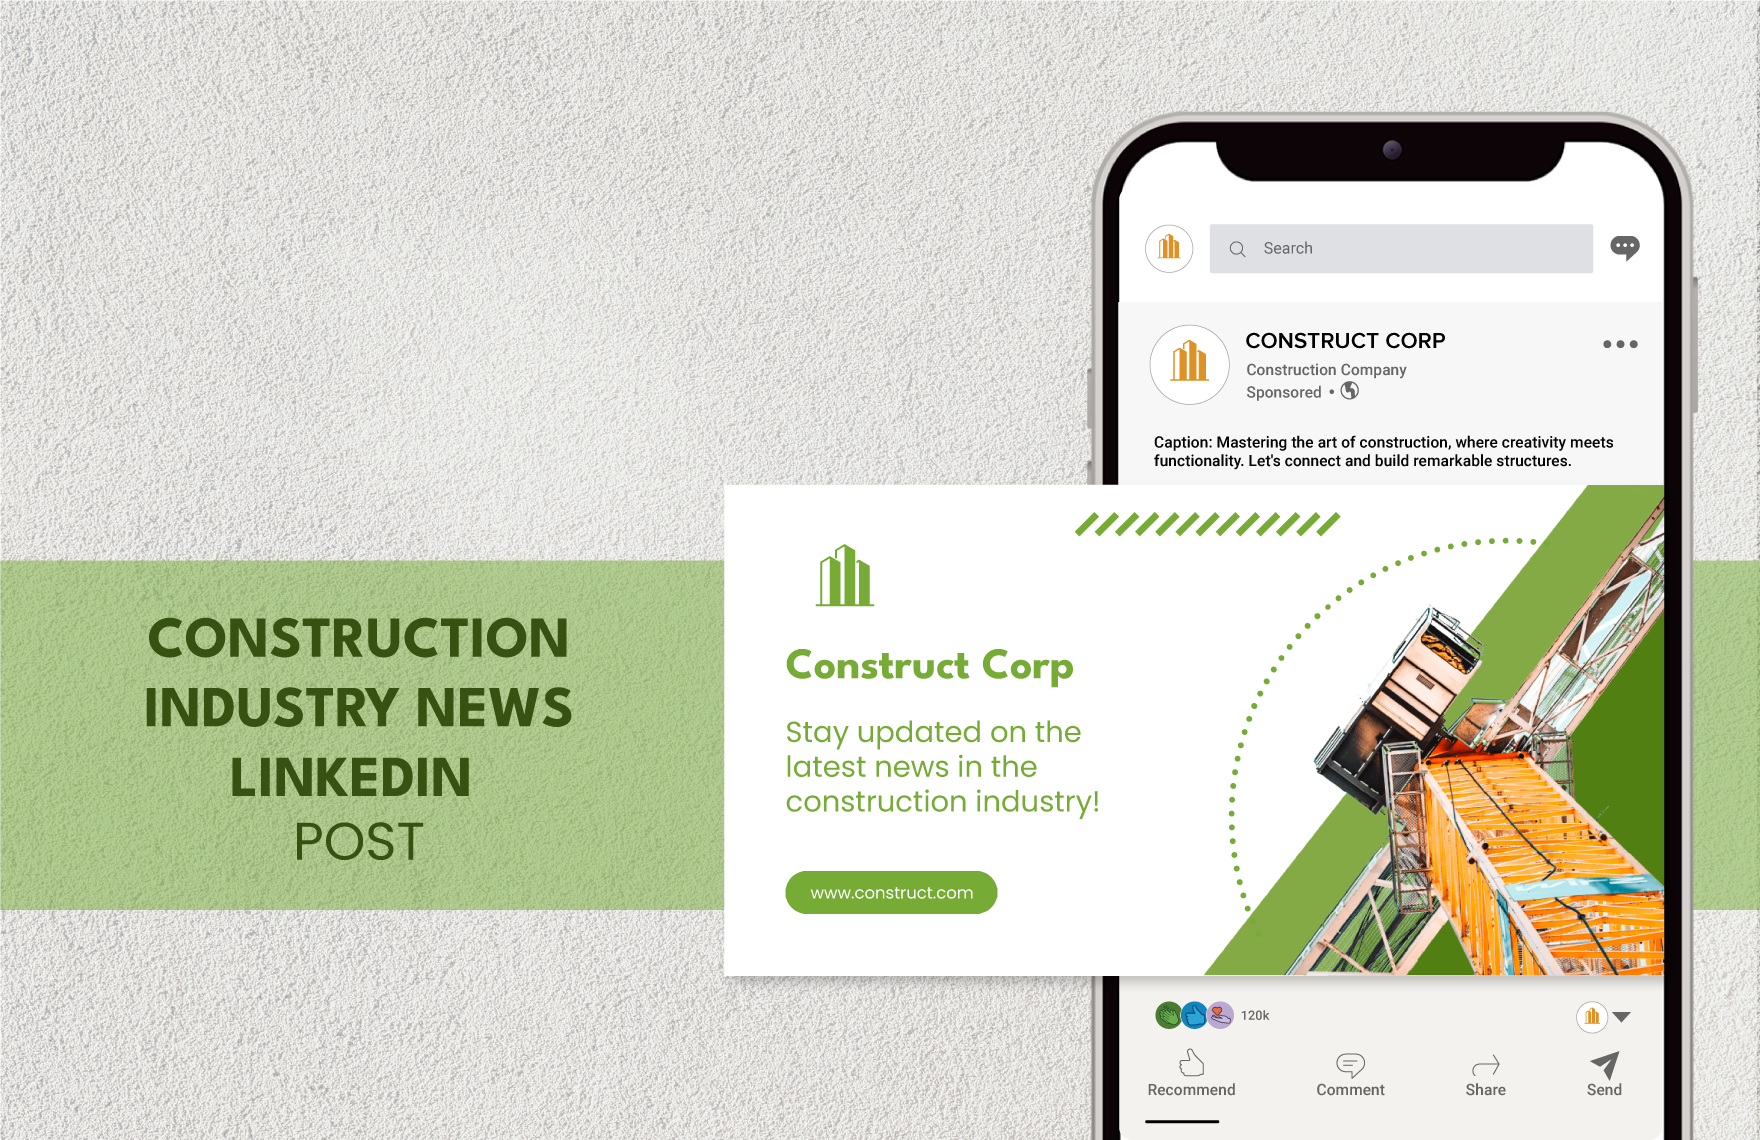 Construction Industry News LinkedIn Post